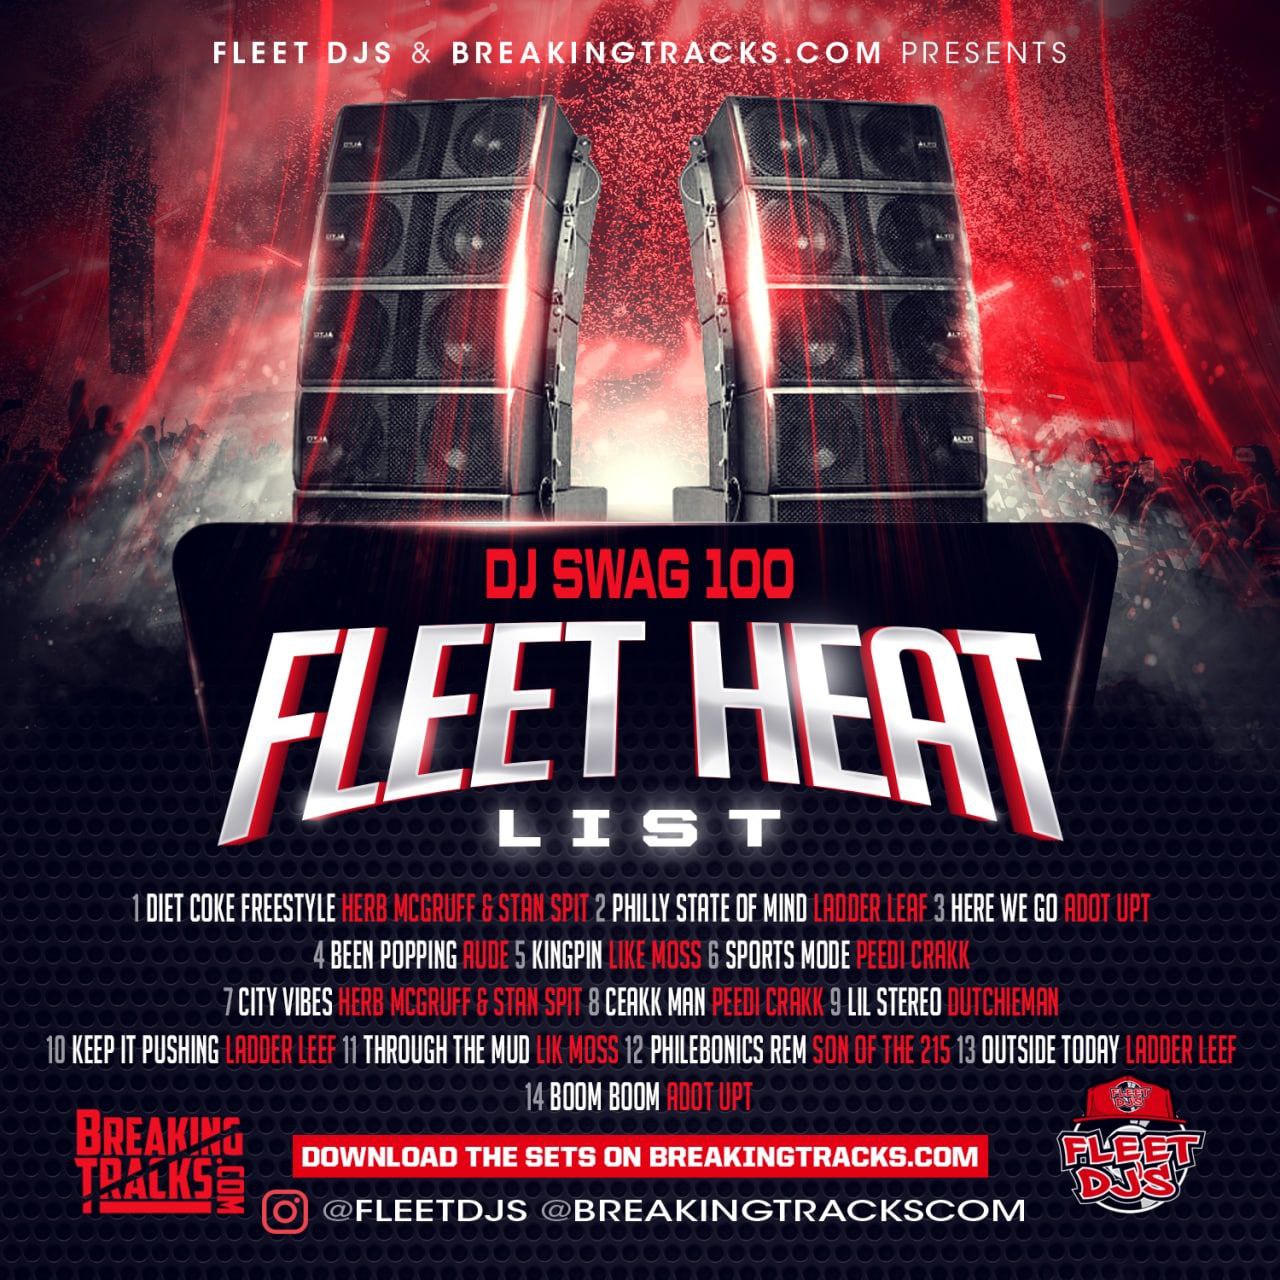 DJ SWAG 100 Fleet Heat vol 42 (Hip Hop & R&B)